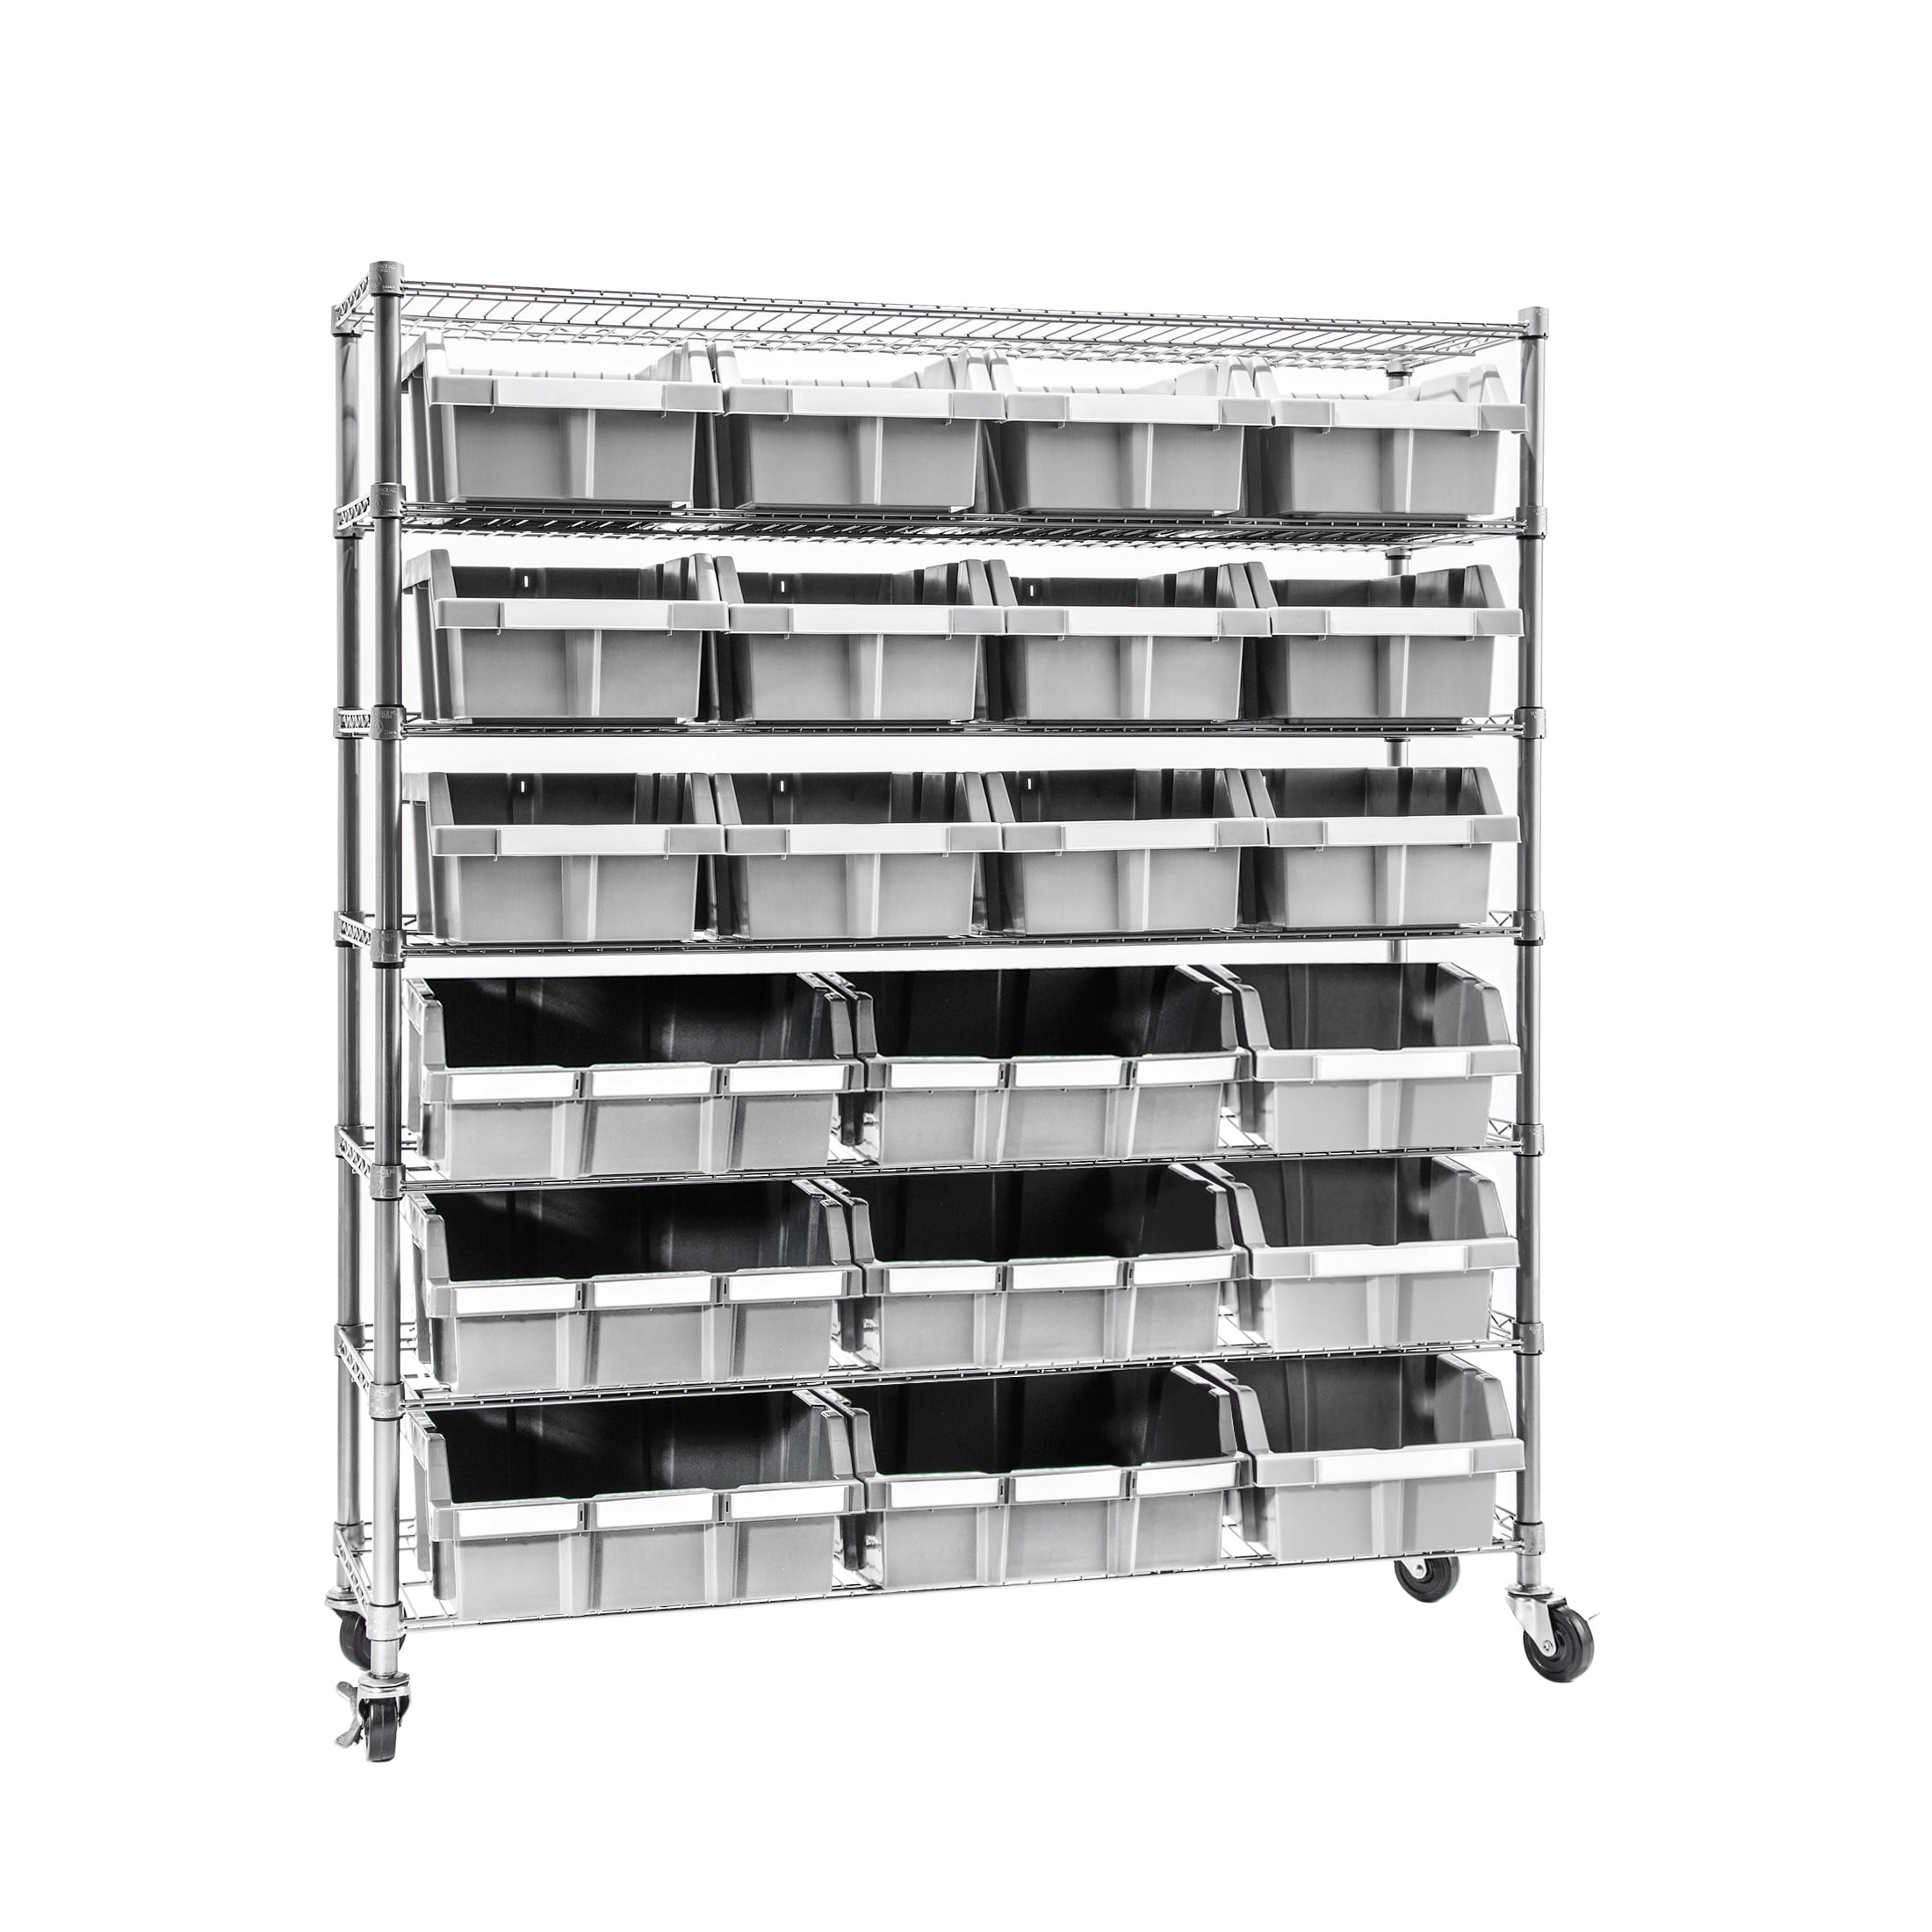 Bin Rack Storage - Industrial Bin Storage Systems